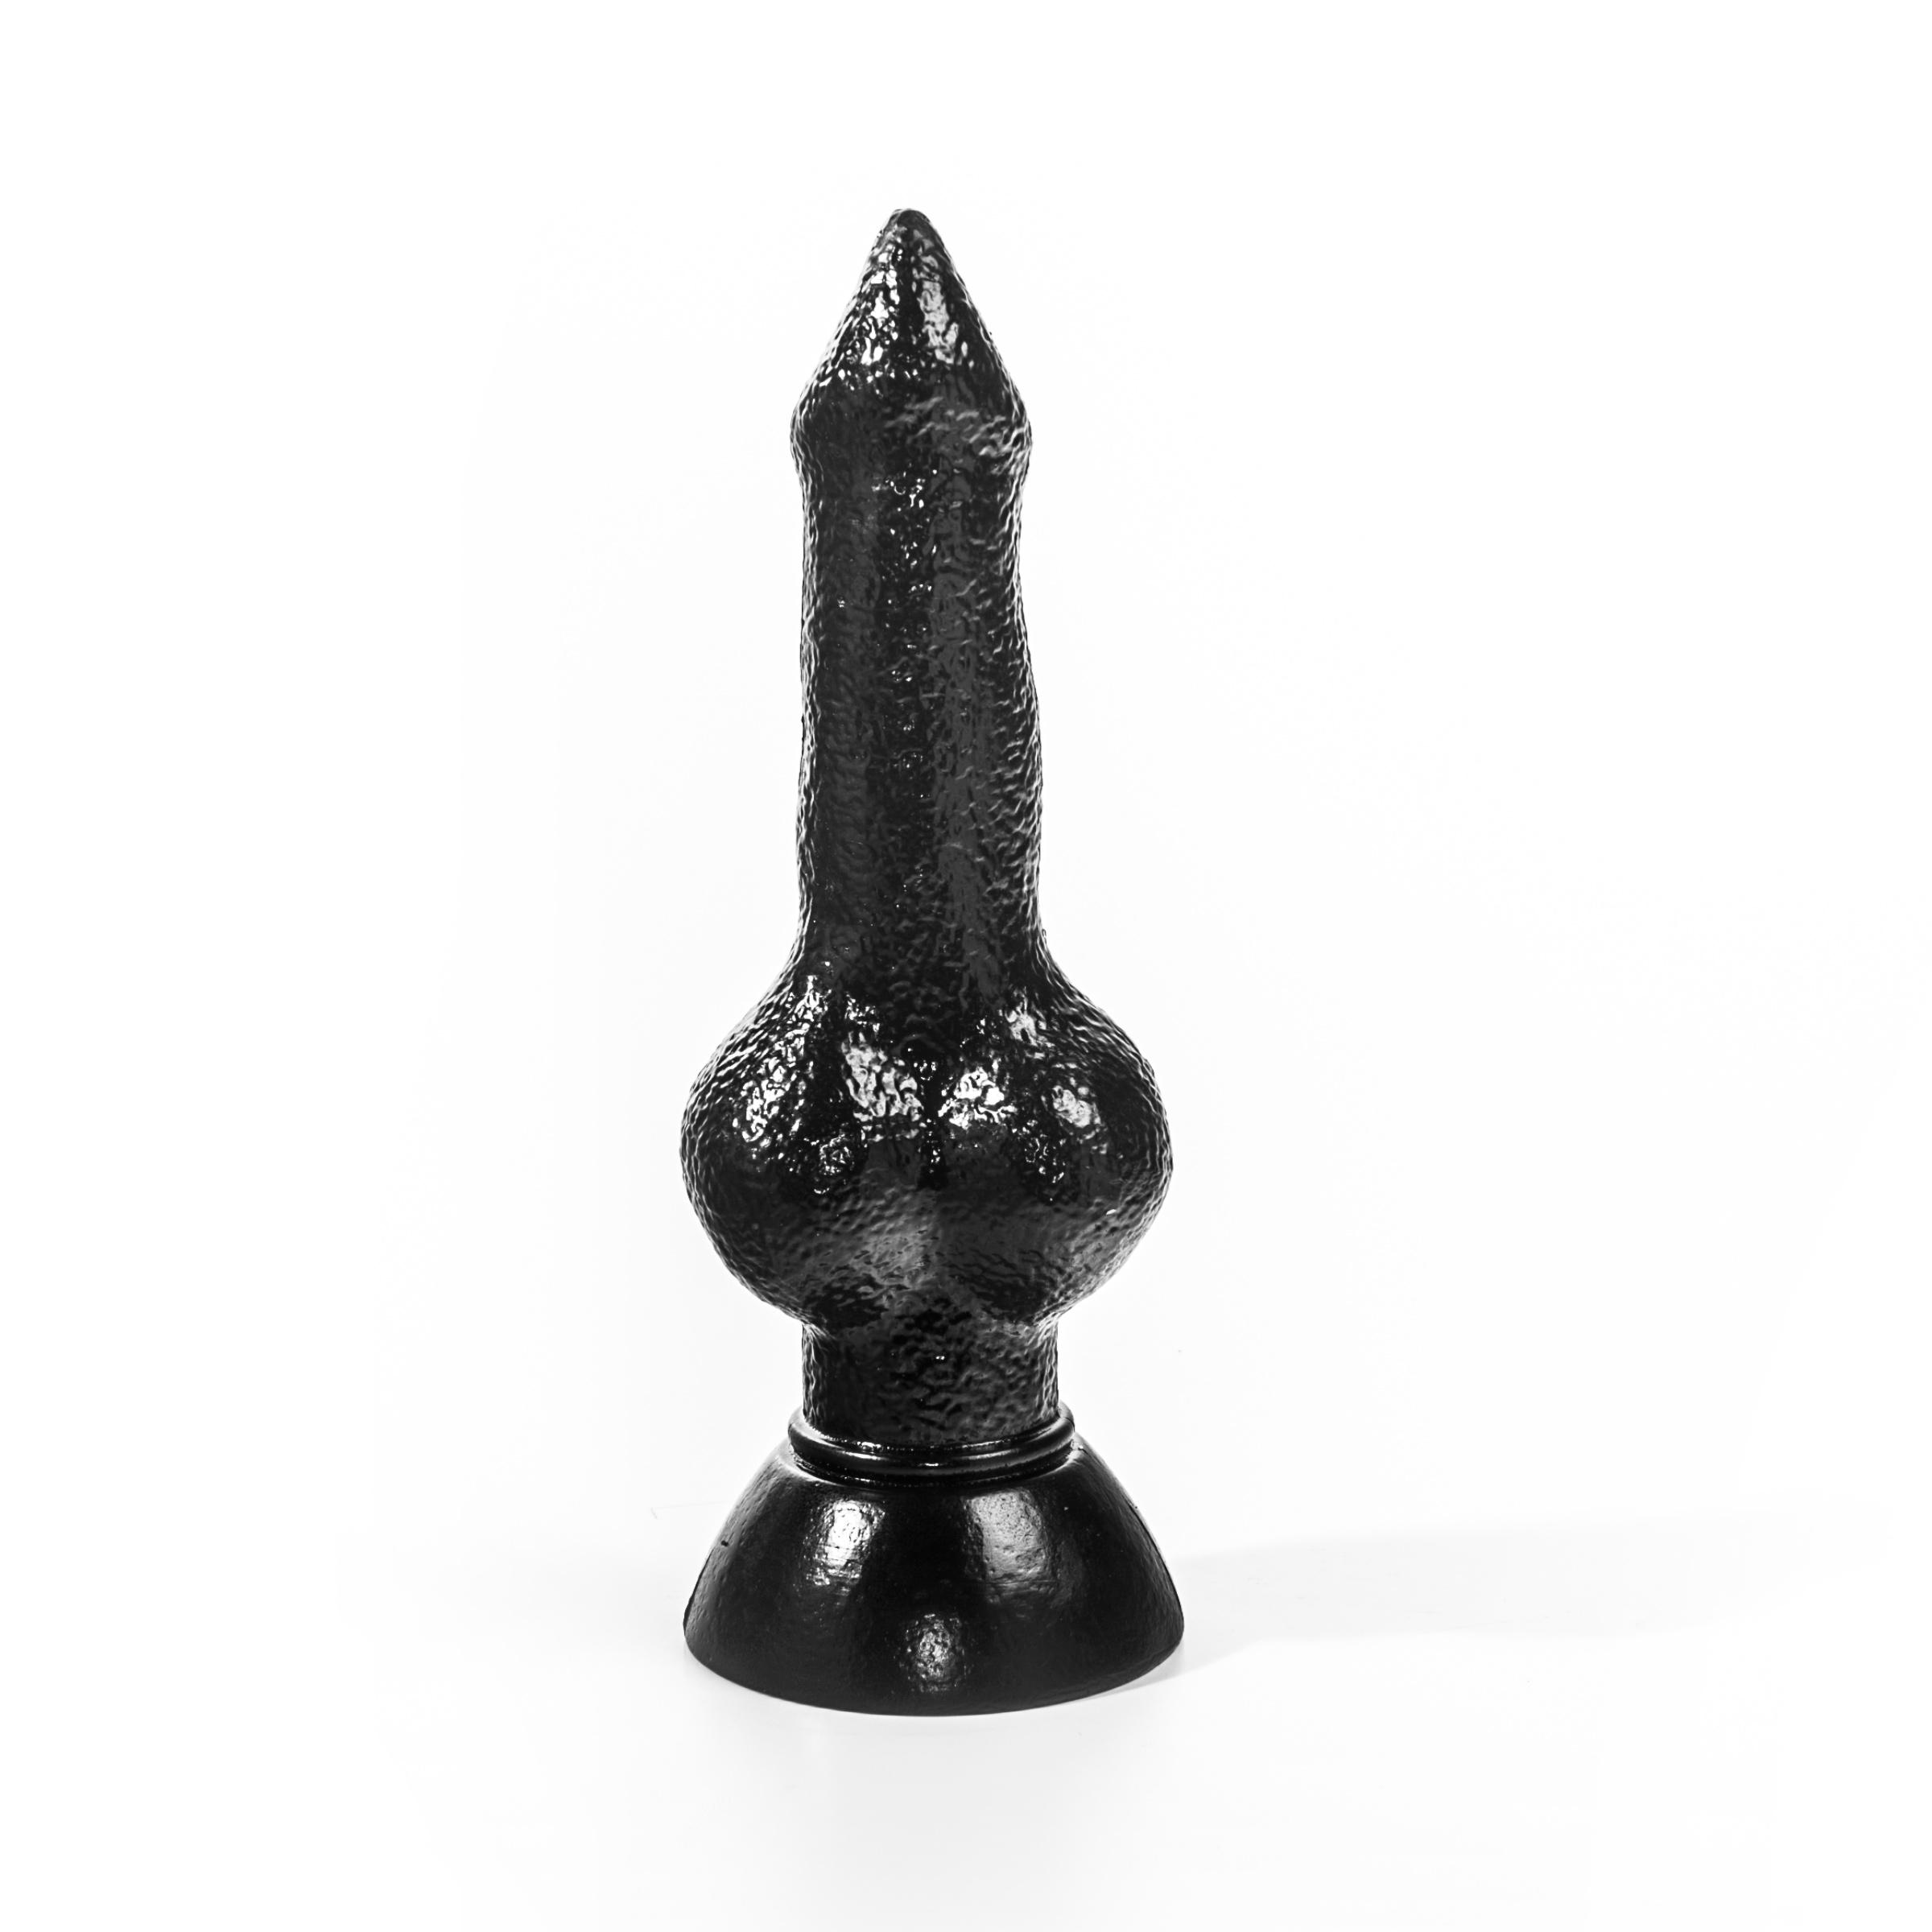 Animal Toy German Dog, AN16, Black, 27 cm